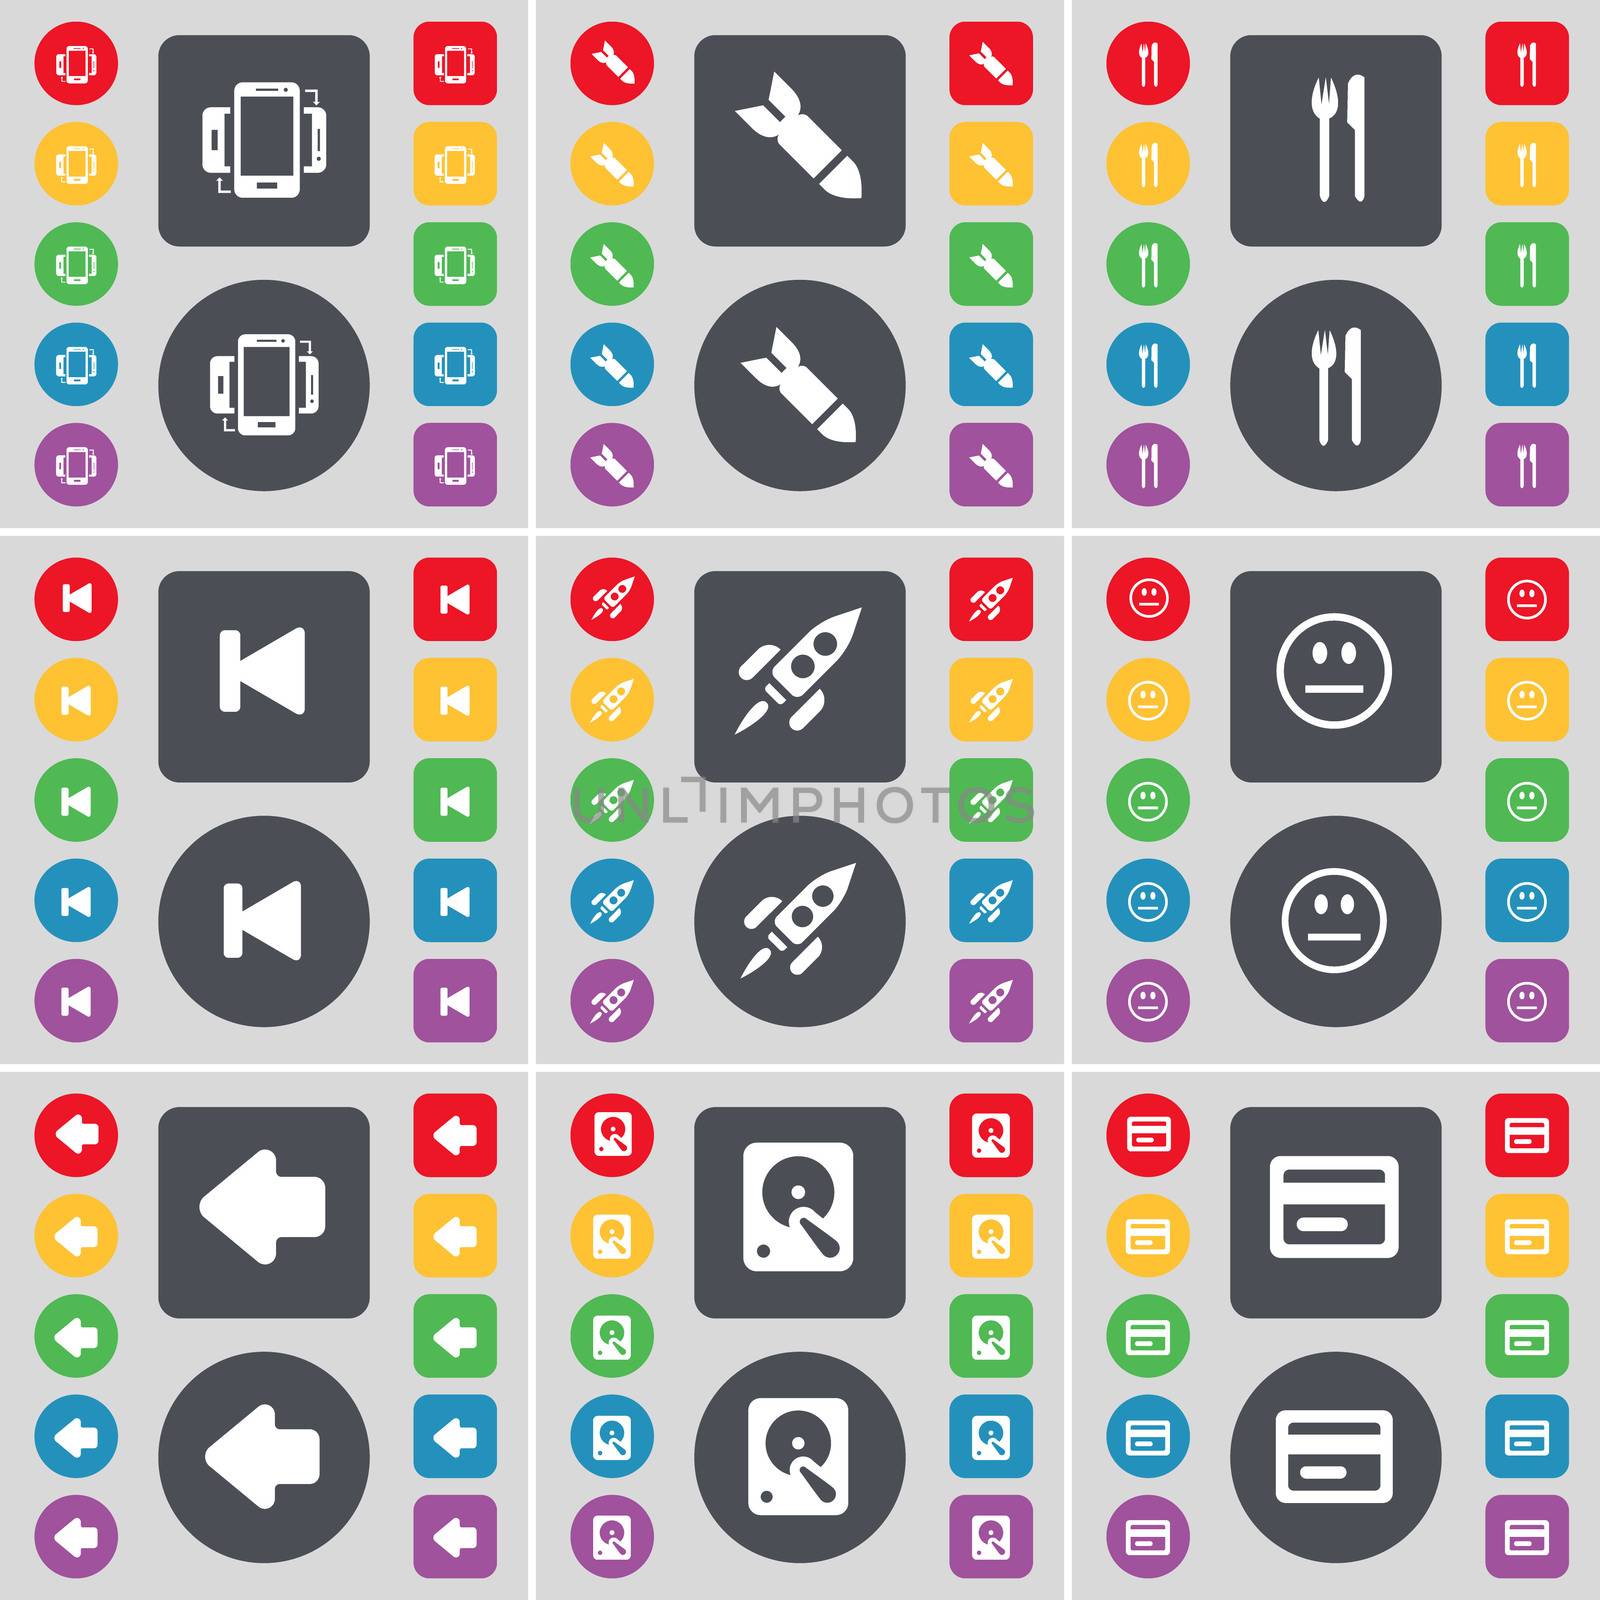 Smartphone, Rocket, Fork and knife, Media skip, Smile, Arrow left, Hard drive, Credit card icon symbol. A large set of flat, colored buttons for your design. illustration